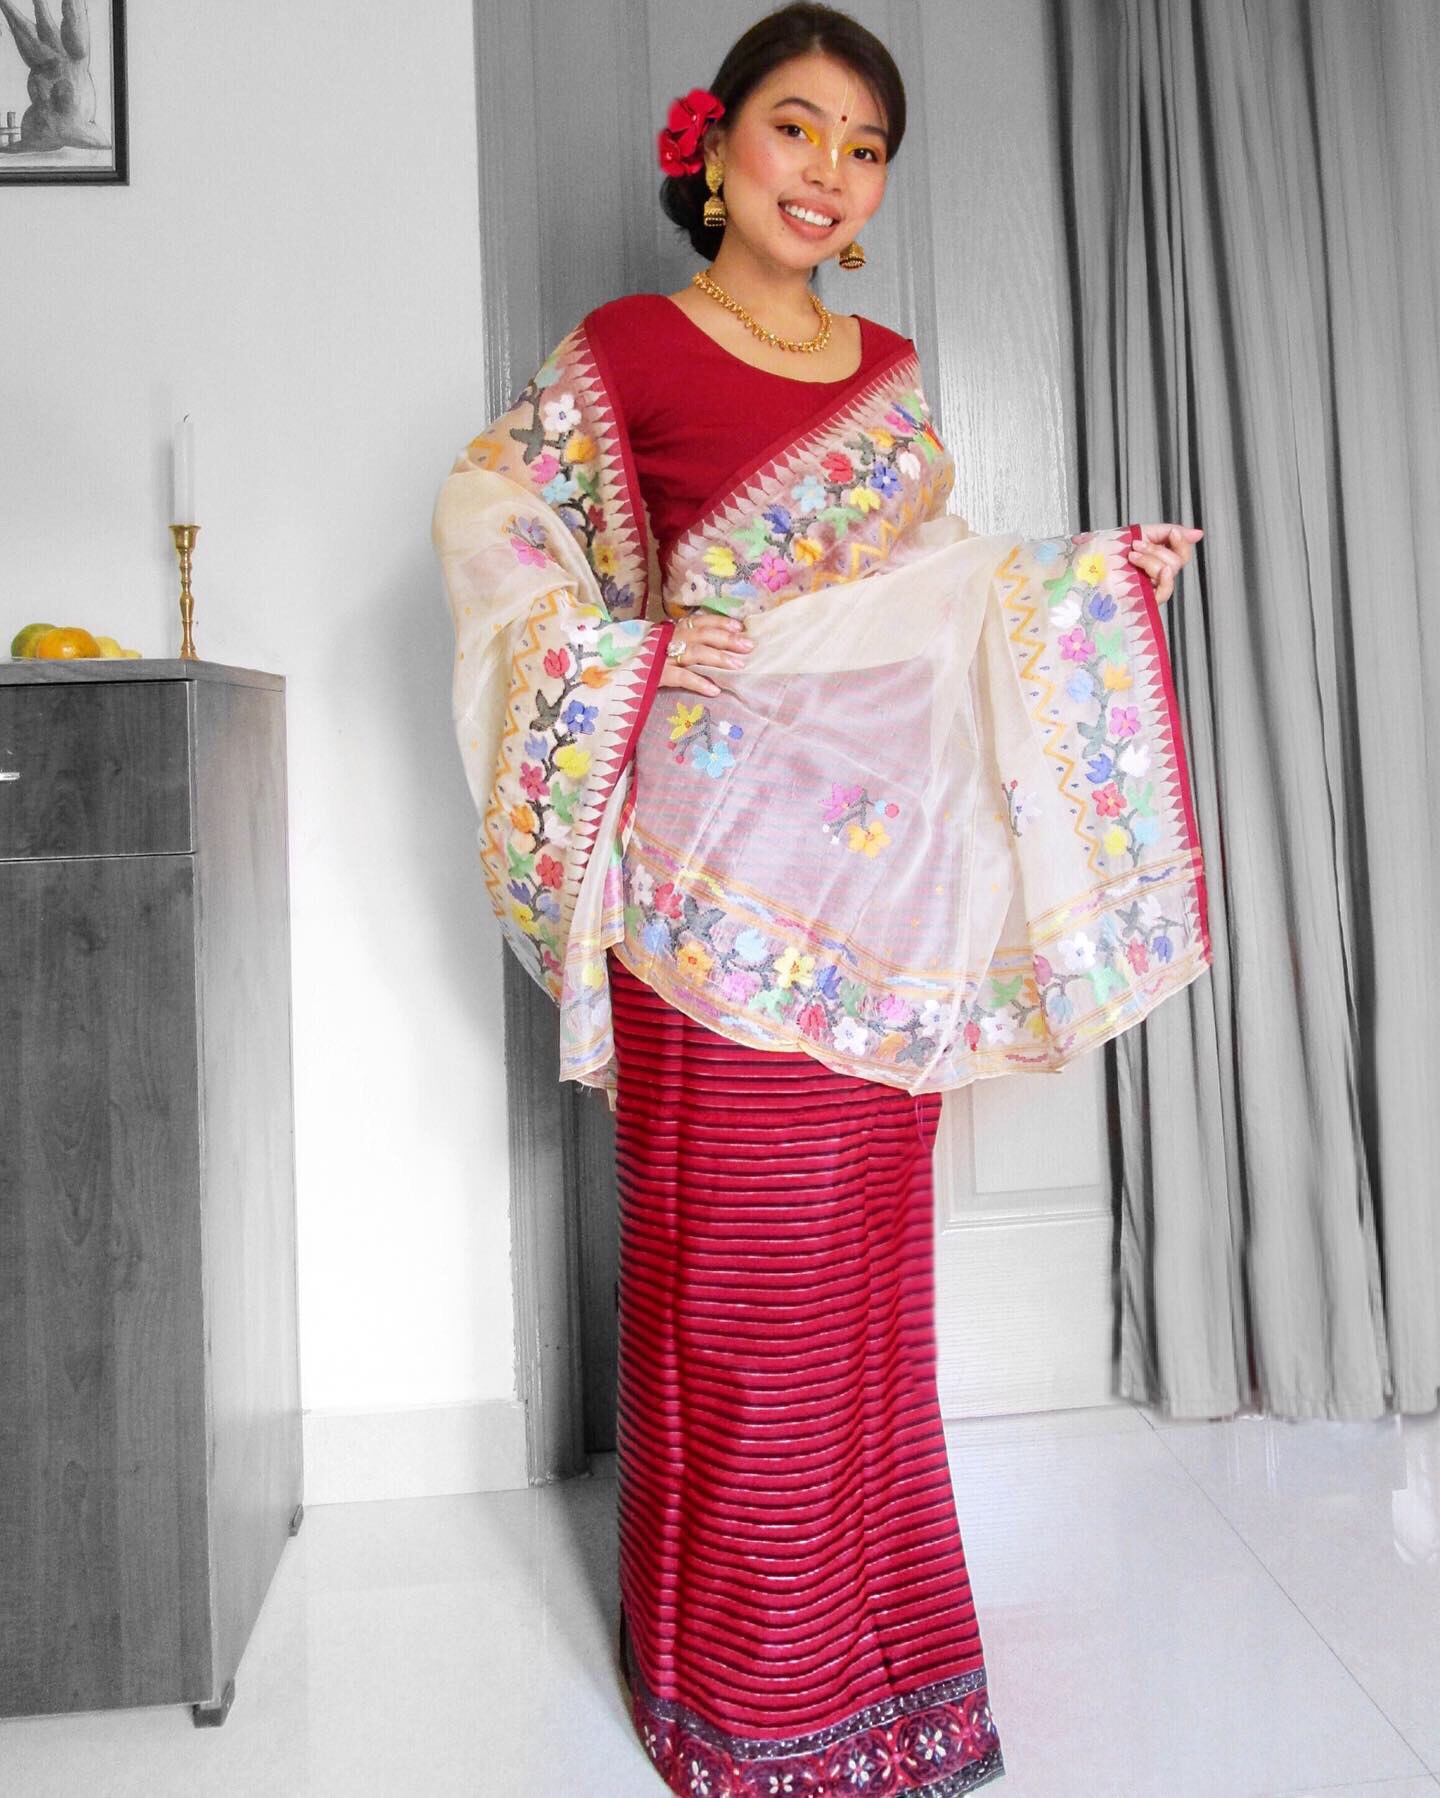 Manipuri woman in traditional dress | Traditional dresses, Traditional  outfits, India beauty women